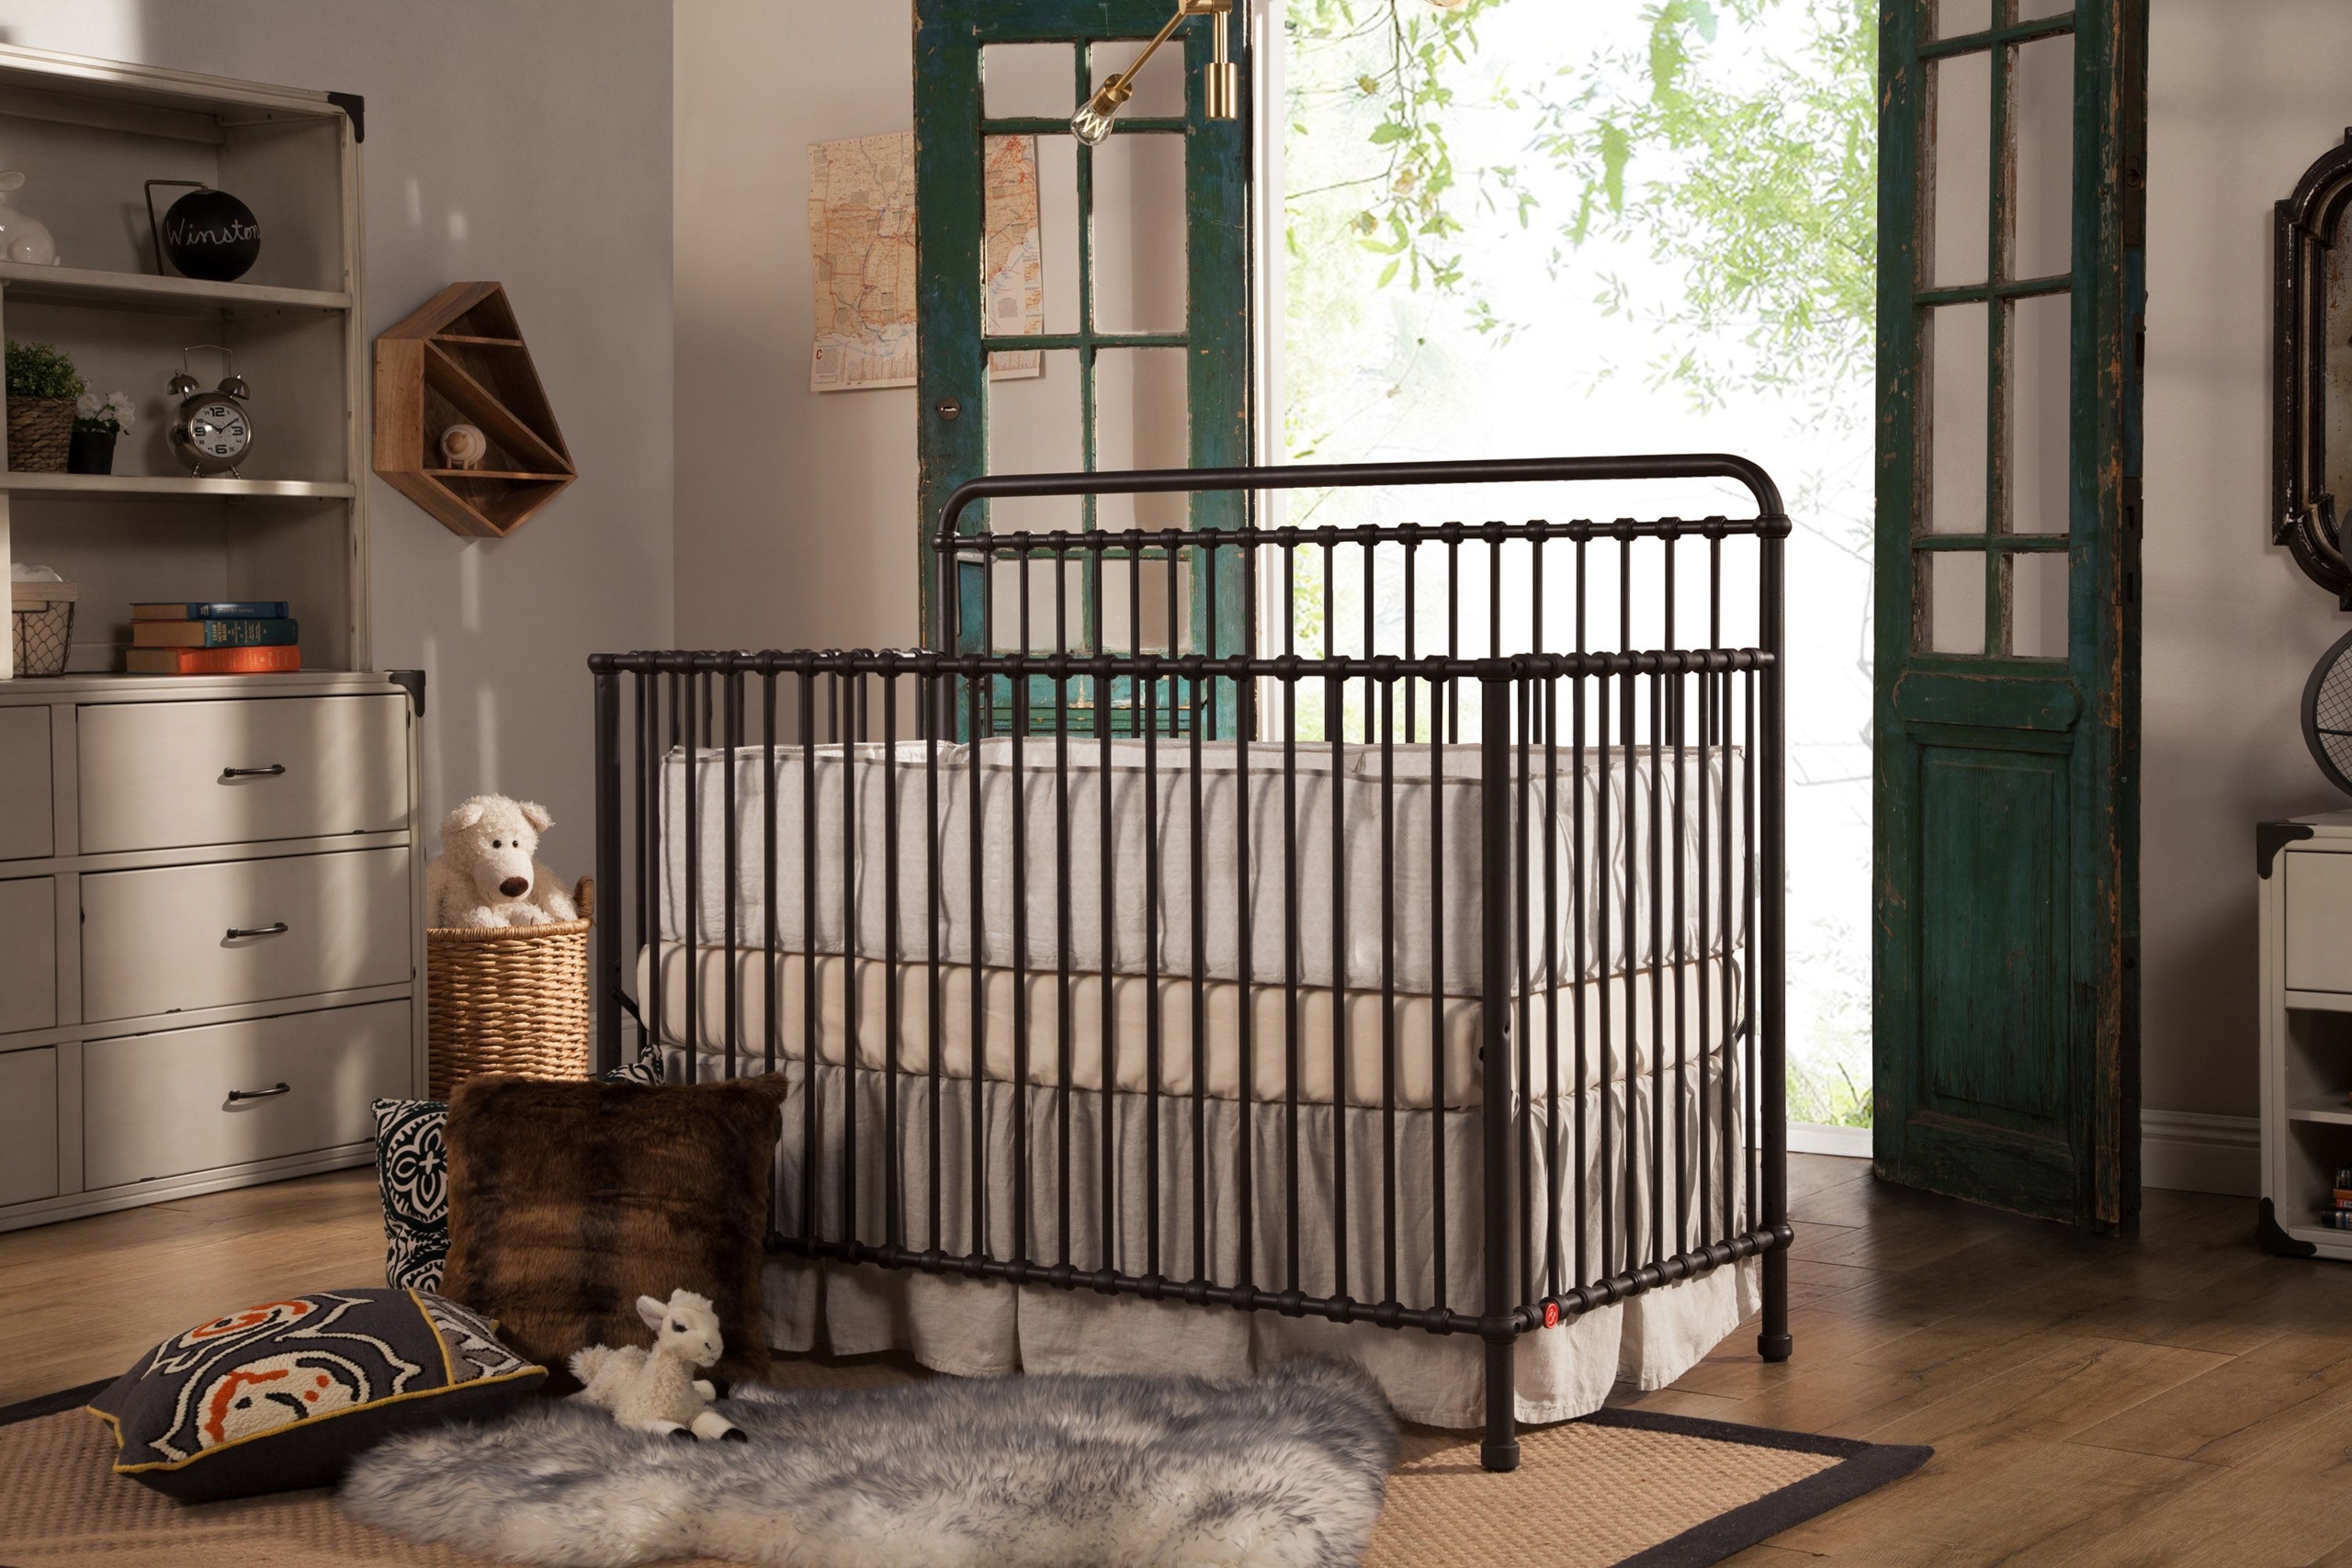 vintage style baby crib